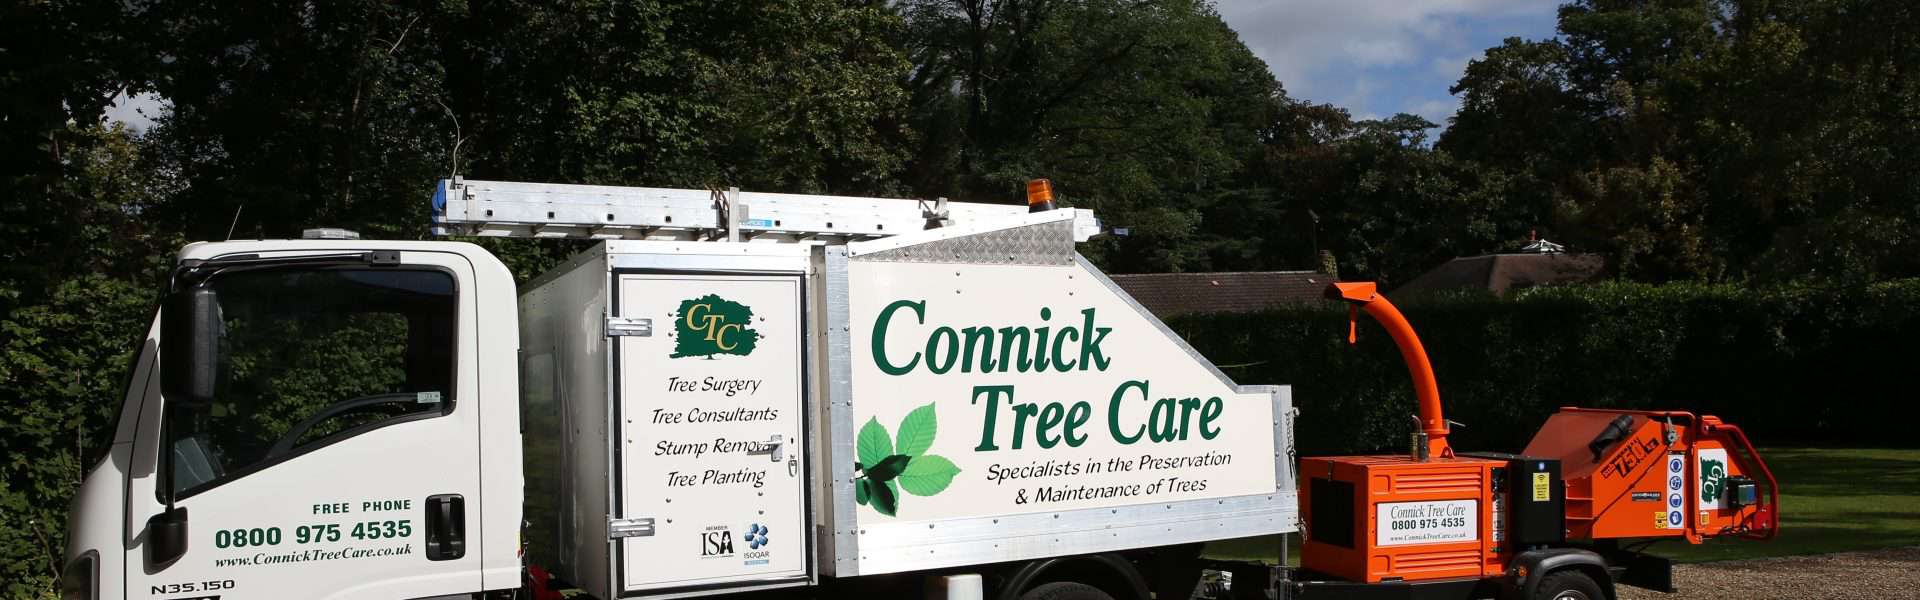 Connick Tree Care truck